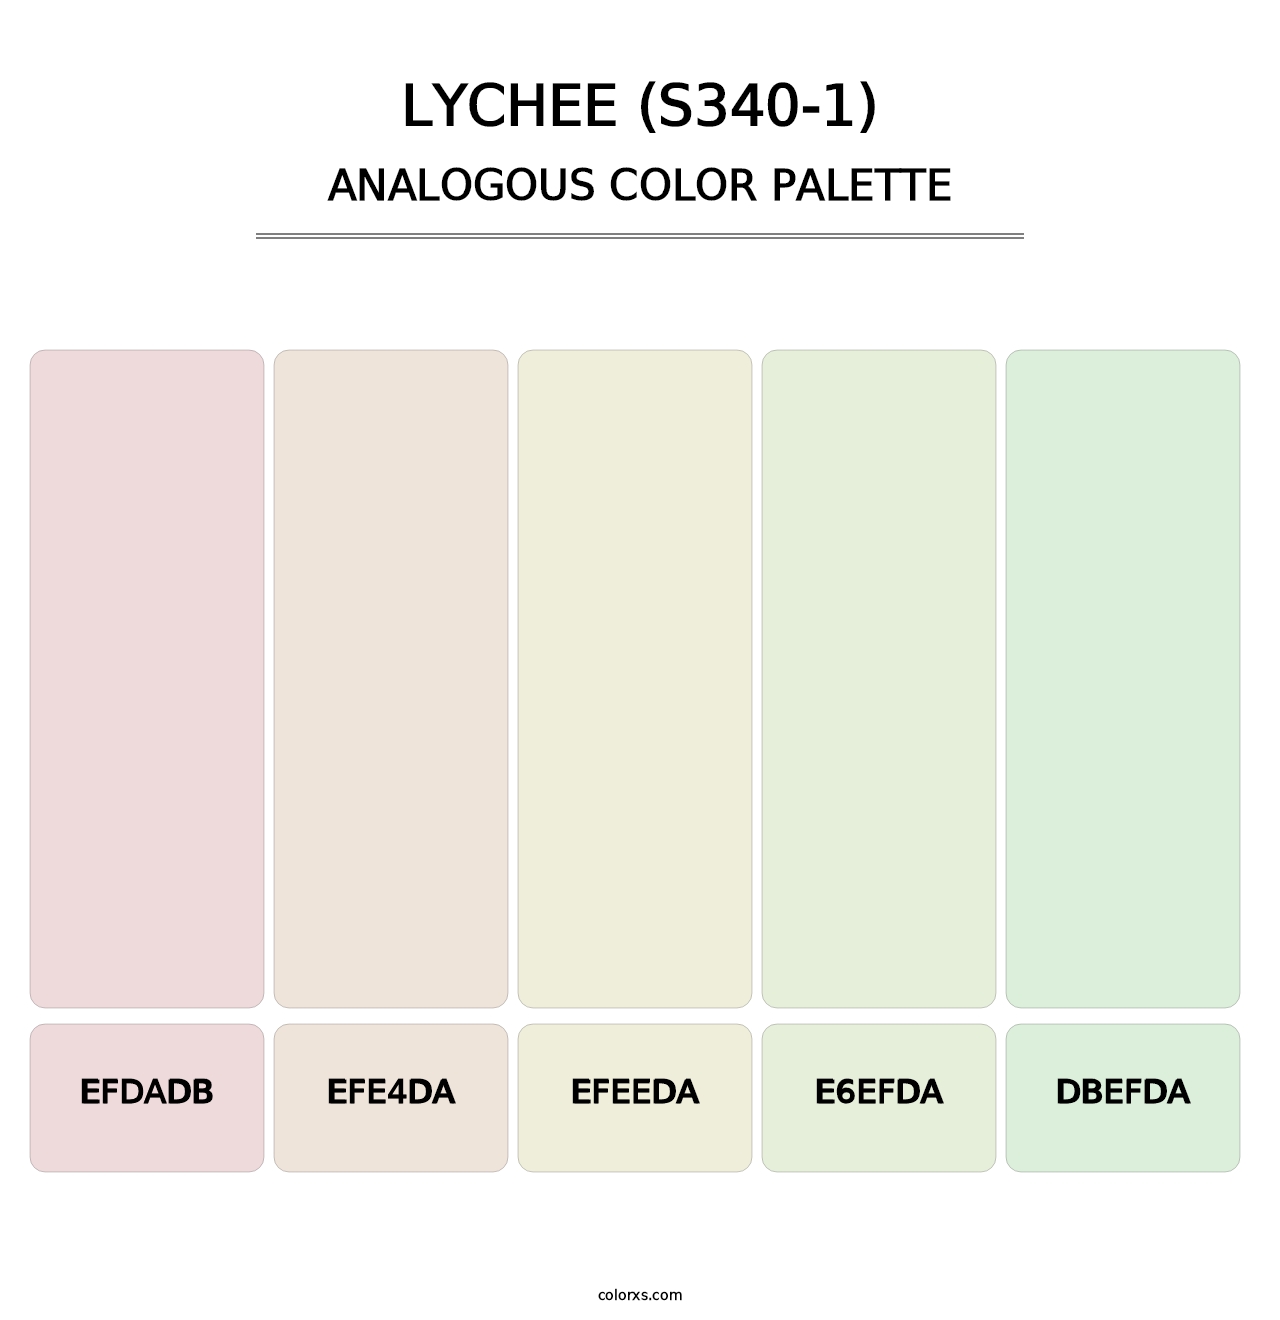 Lychee (S340-1) - Analogous Color Palette